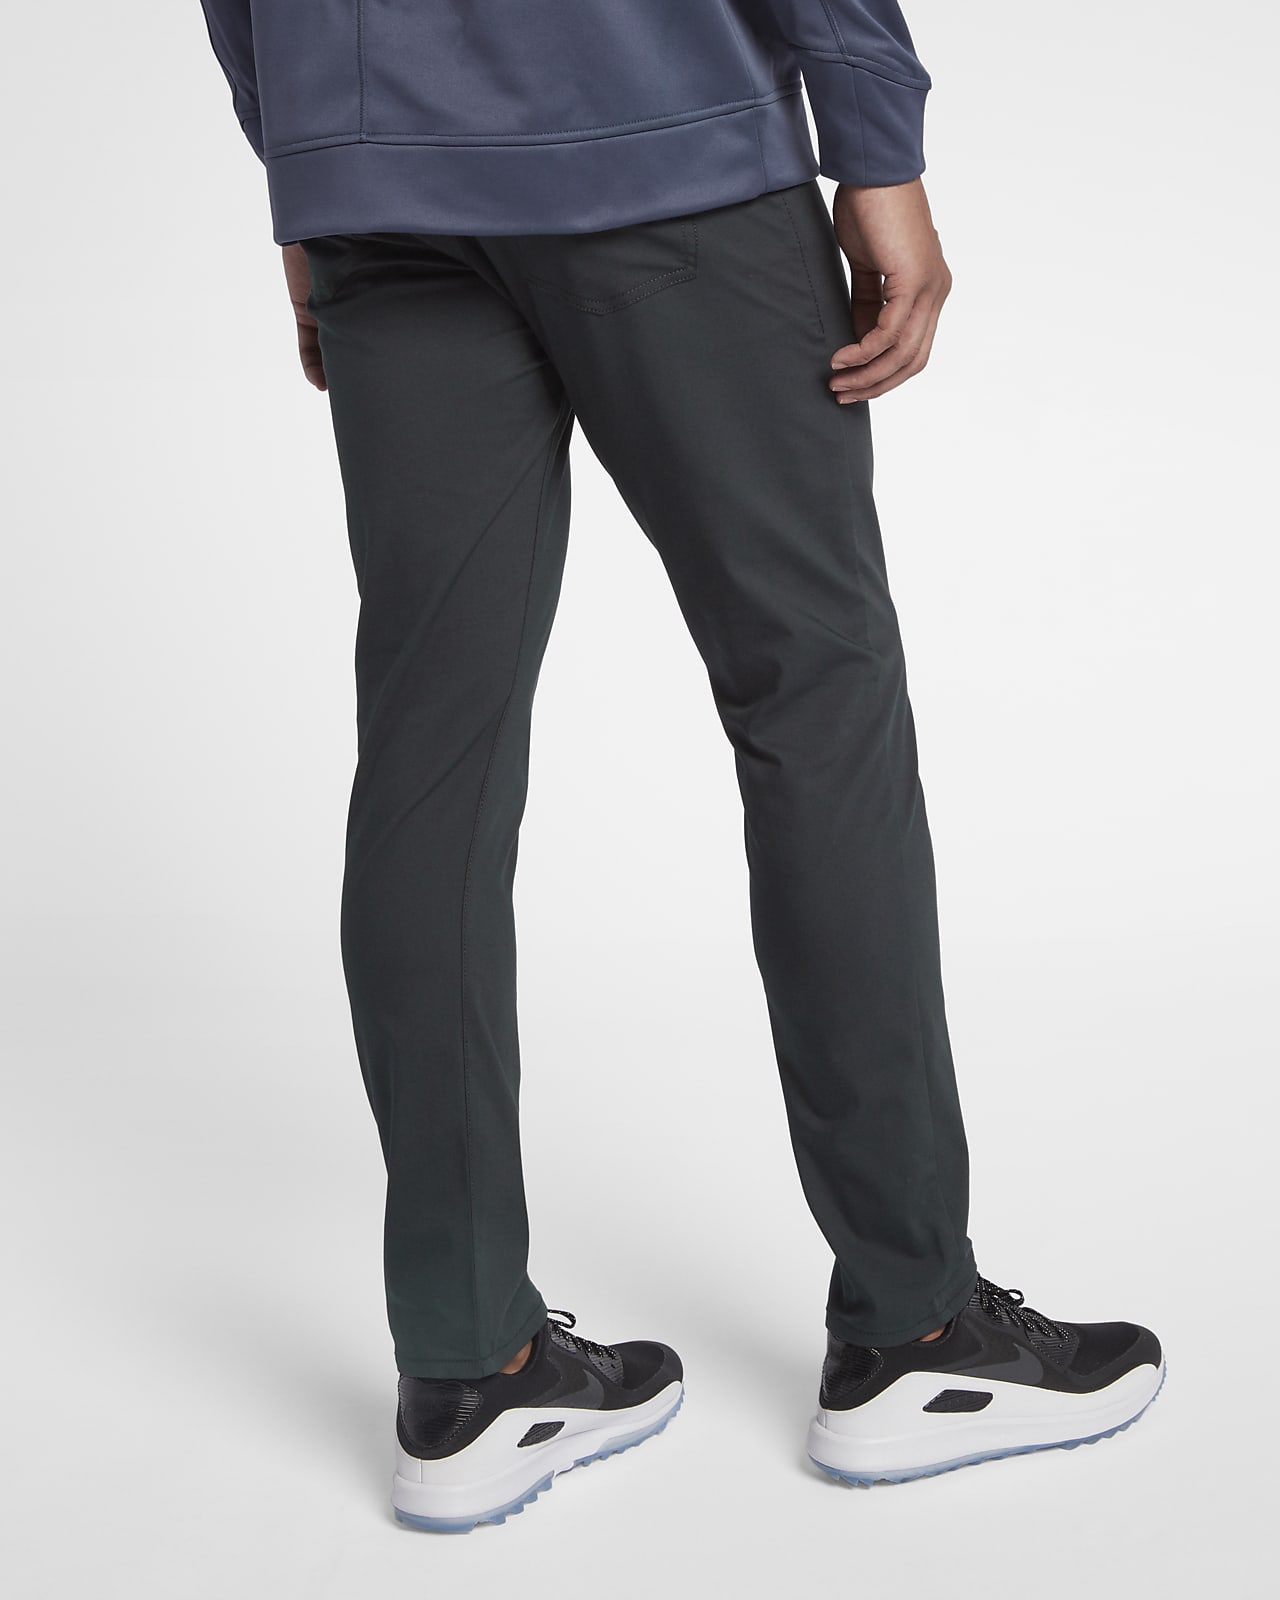 men's slim fit golf shorts nike flex